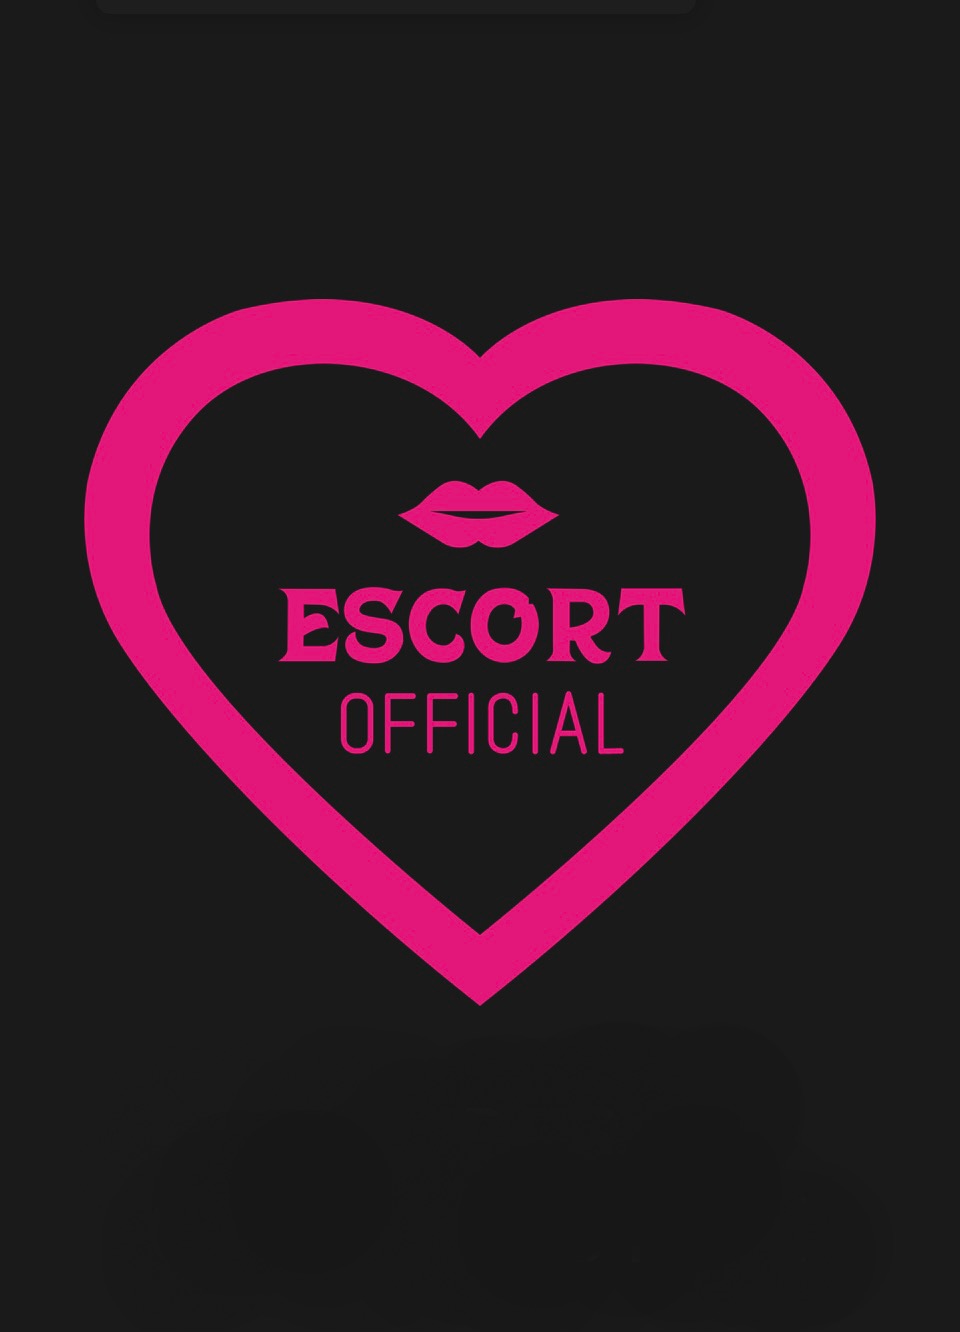 Escort Official